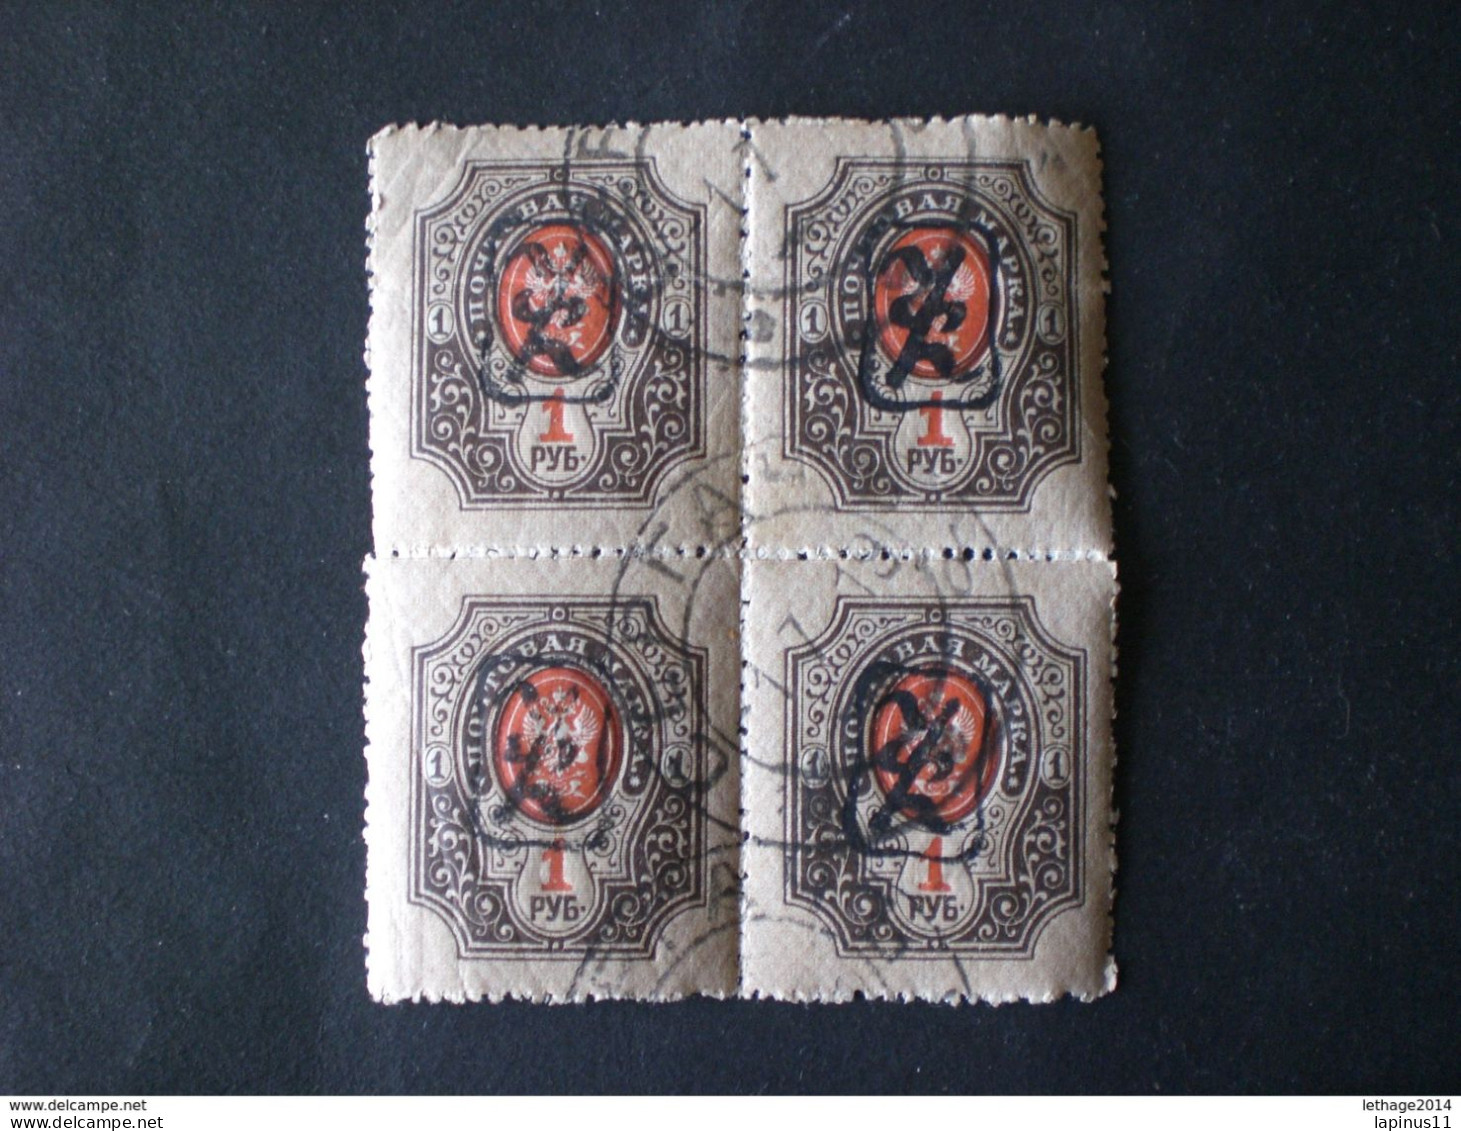 ARMENIA 1919 Russian Postage Stamps Overprinted - Armenia